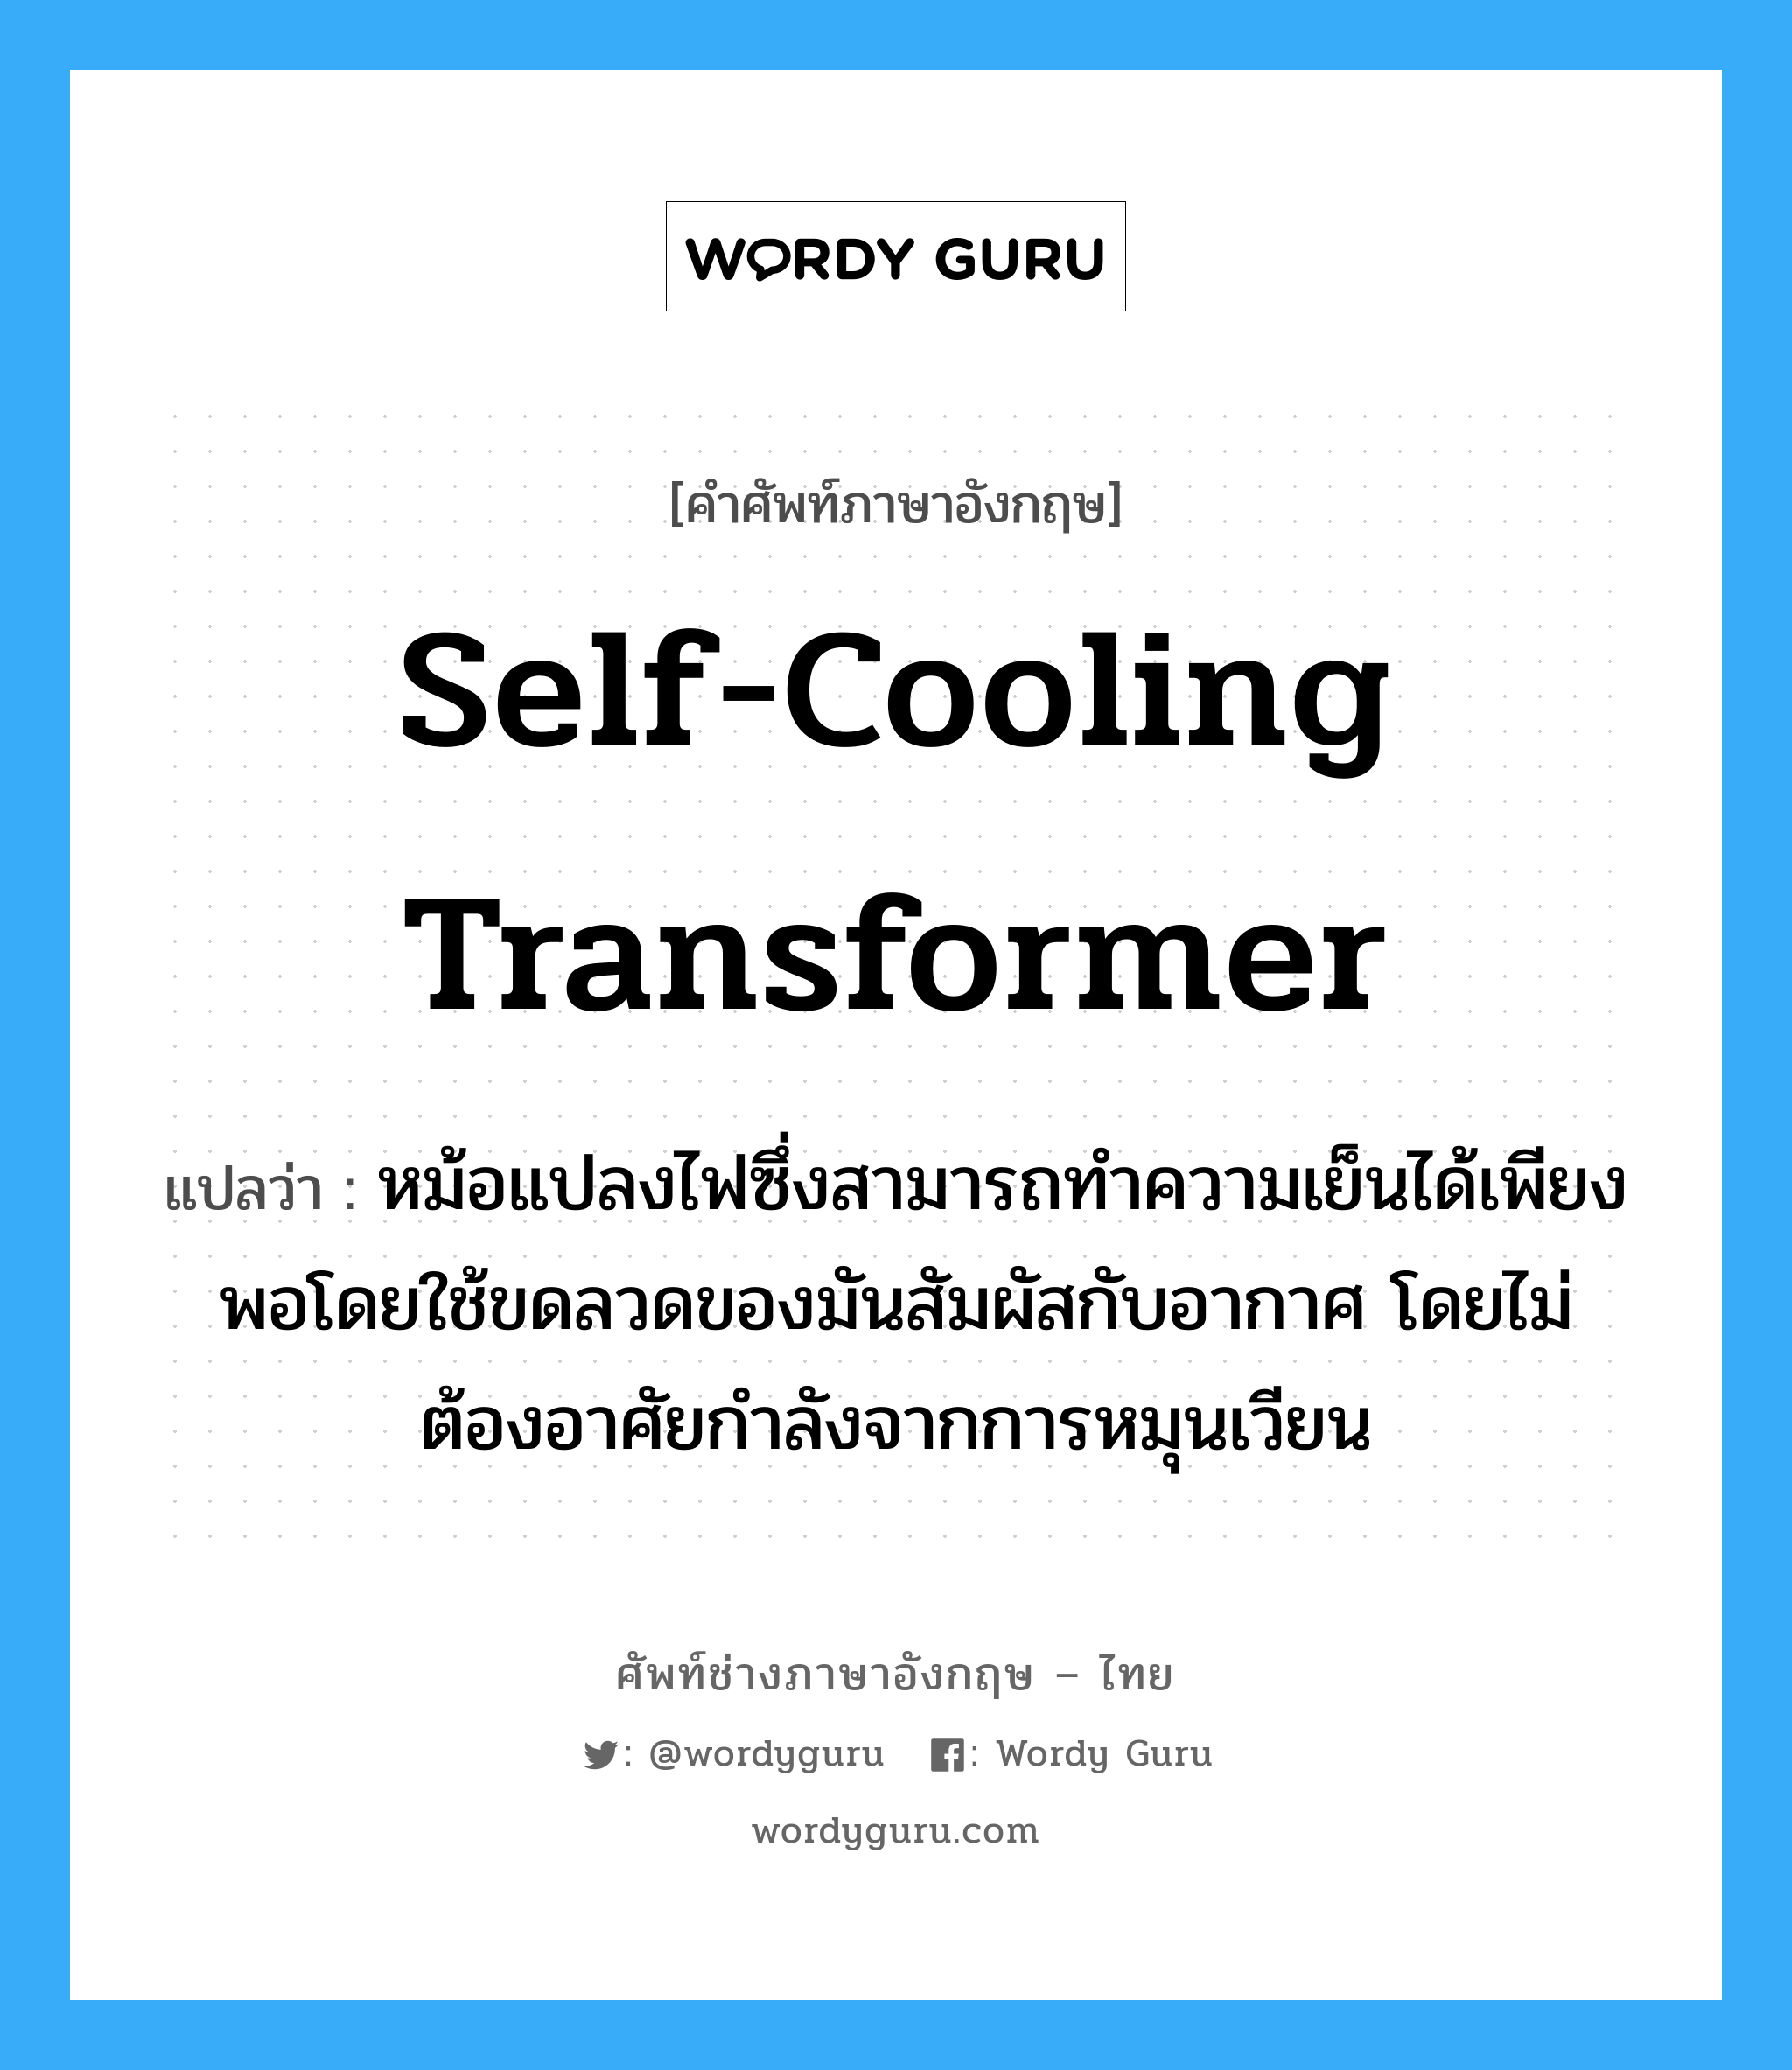 self-cooling transformer แปลว่า?, คำศัพท์ช่างภาษาอังกฤษ - ไทย self-cooling transformer คำศัพท์ภาษาอังกฤษ self-cooling transformer แปลว่า หม้อแปลงไฟซึ่งสามารถทำความเย็นได้เพียงพอโดยใช้ขดลวดของมันสัมผัสกับอากาศ โดยไม่ต้องอาศัยกำลังจากการหมุนเวียน